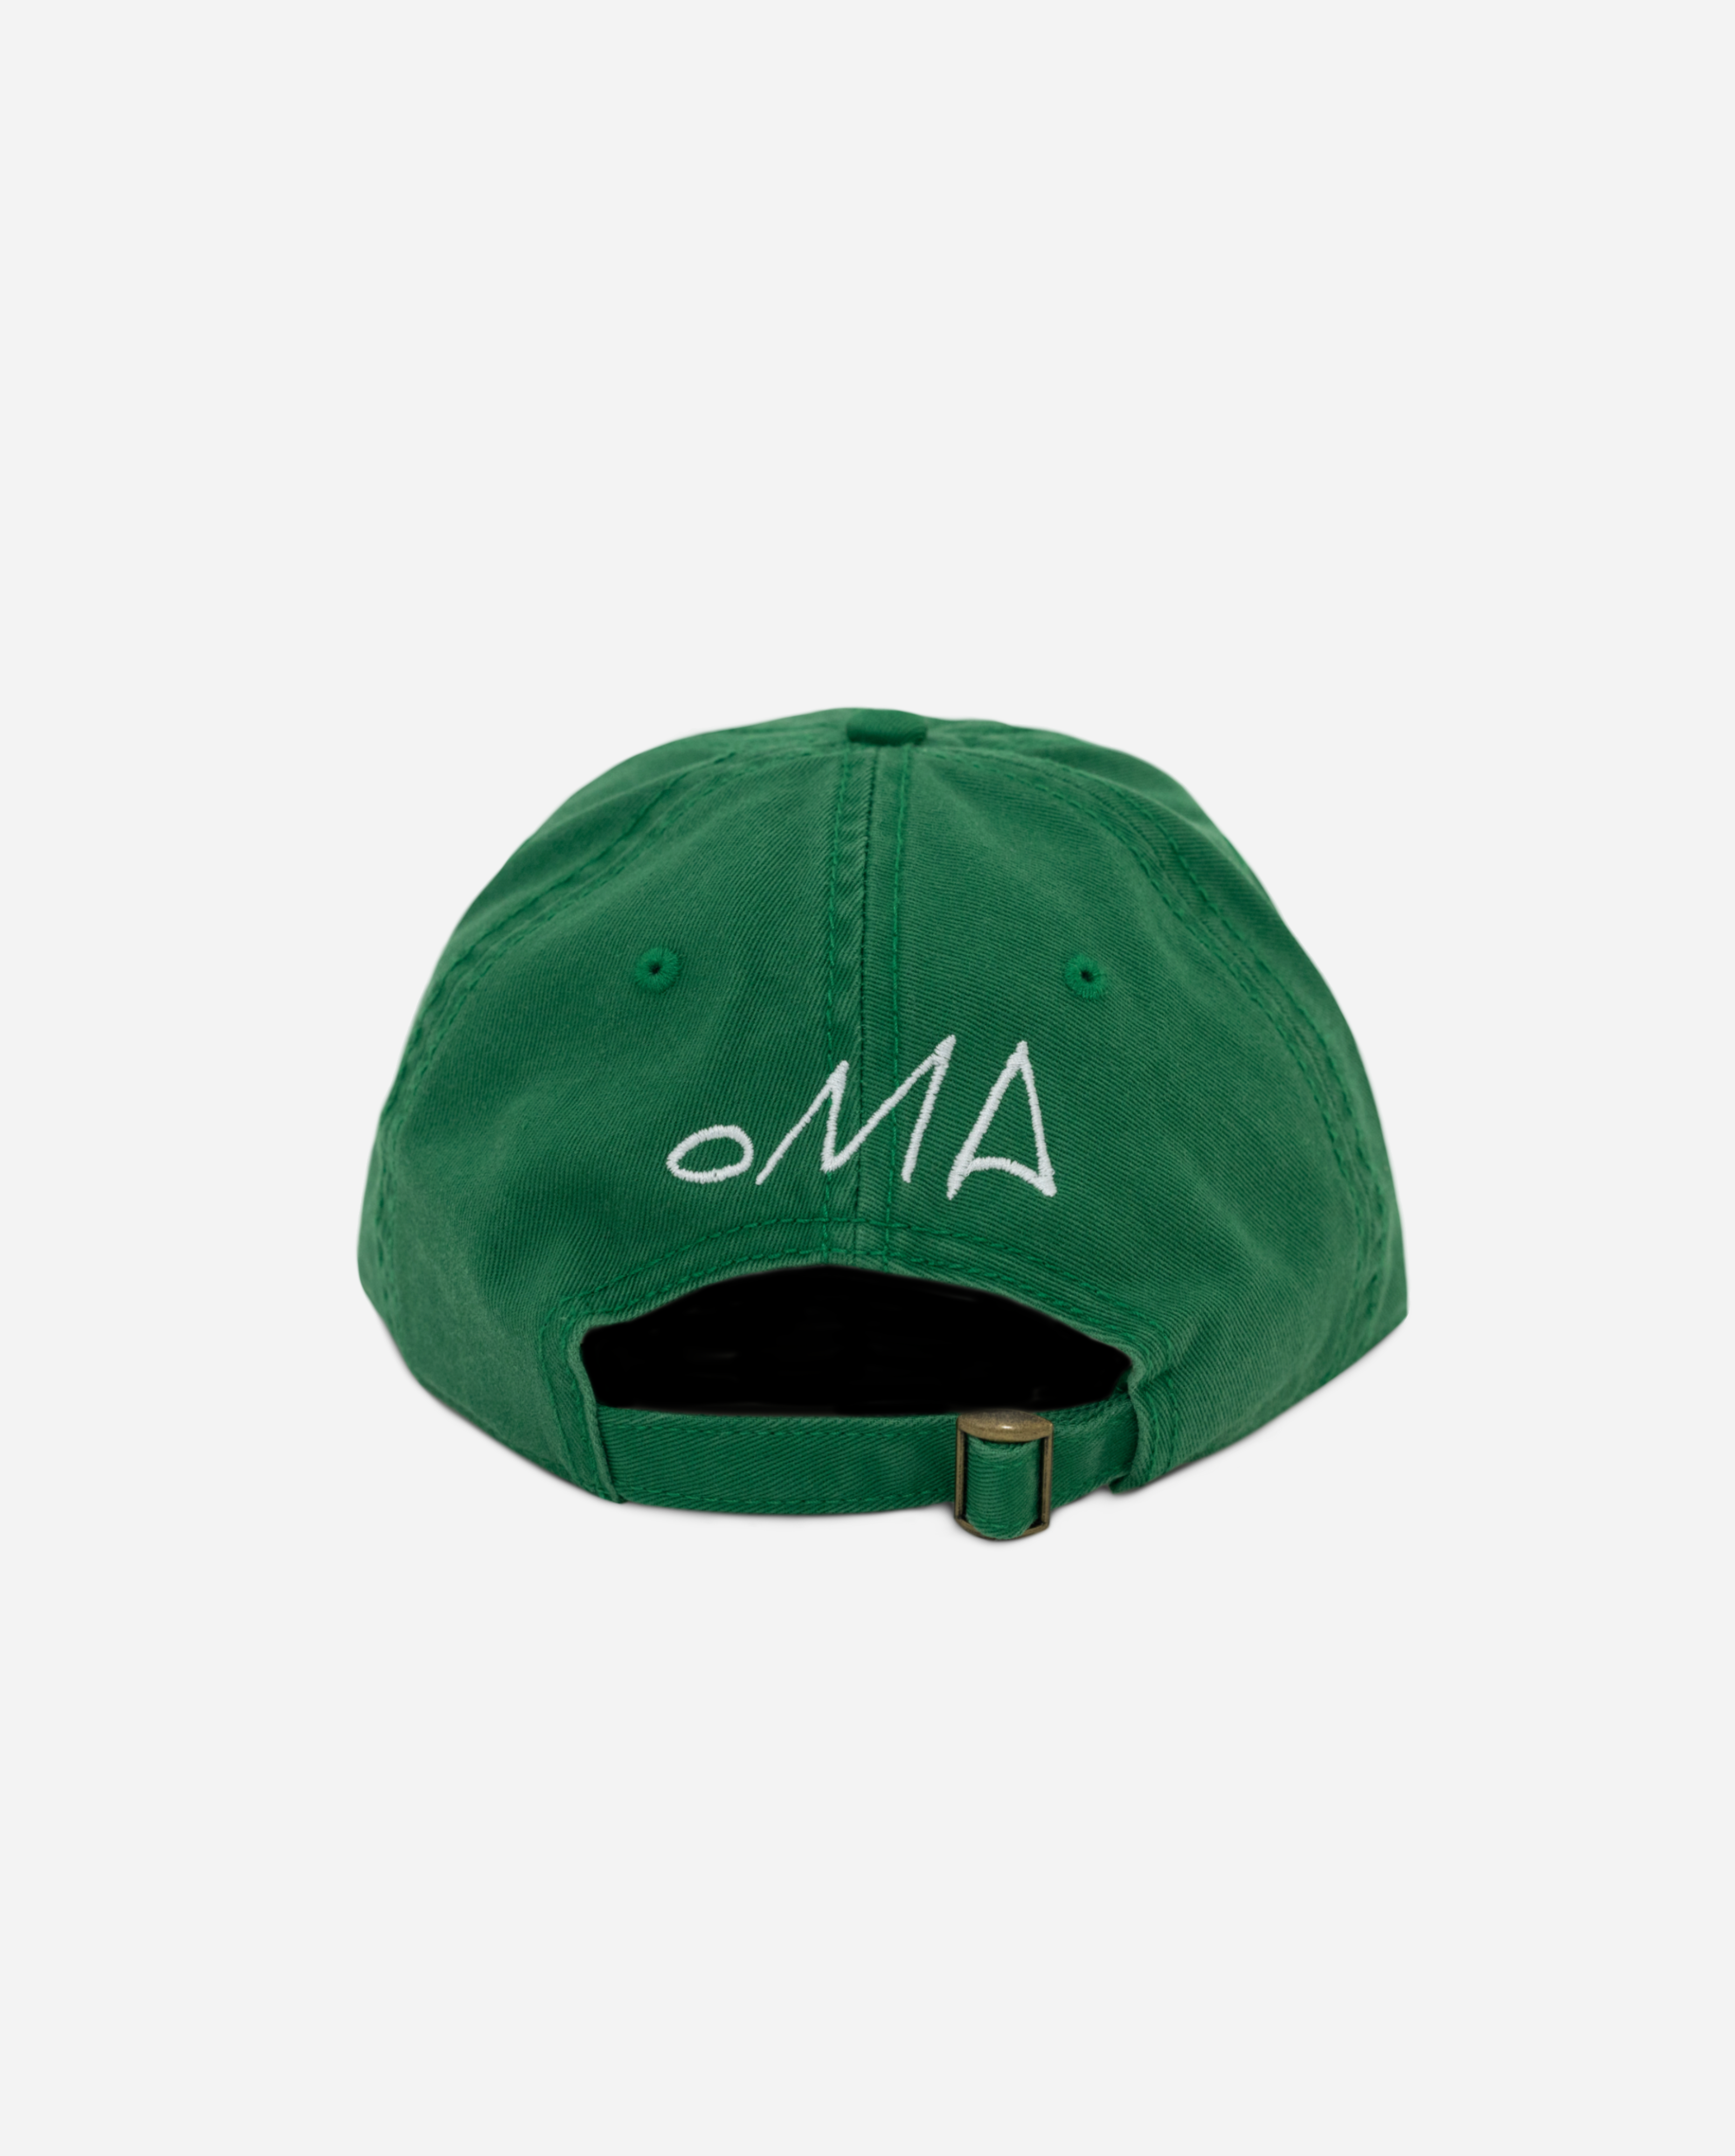 oMA GALLERY CAP (GREEN)